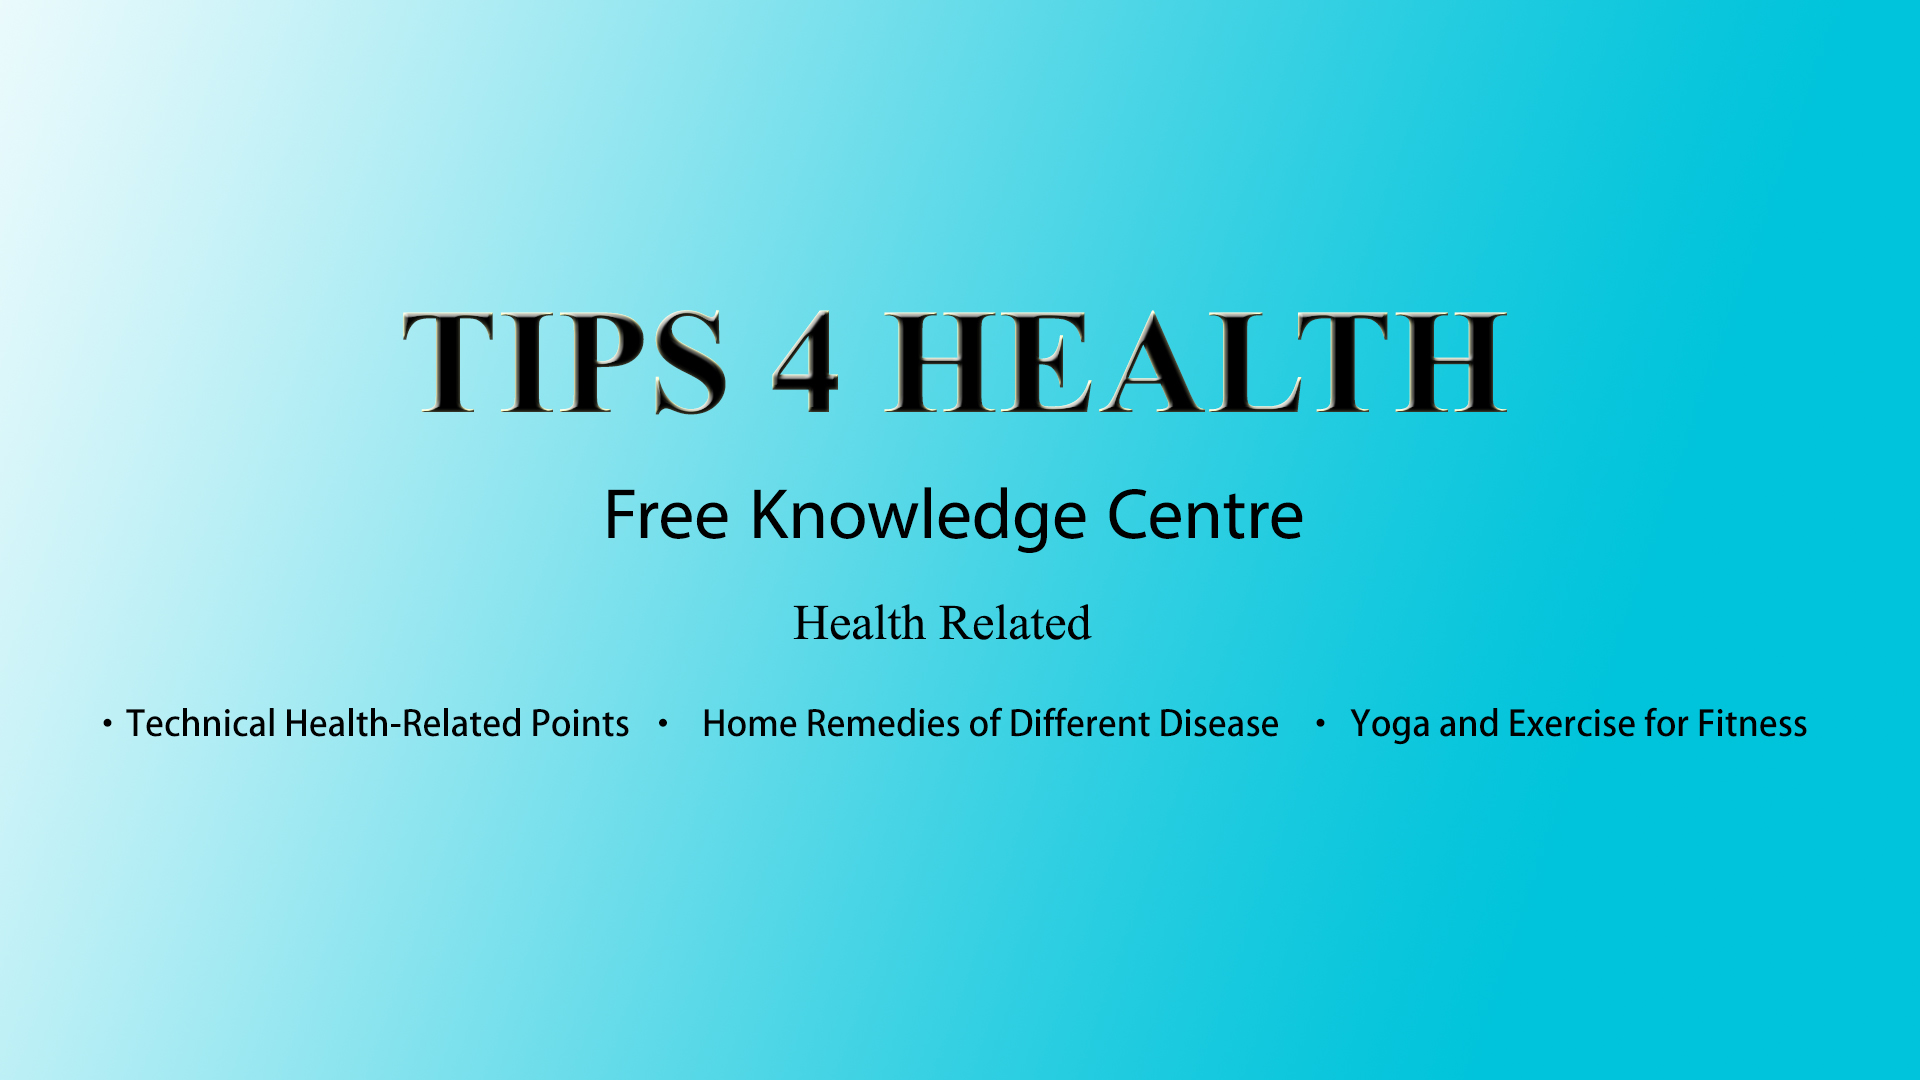 Tips 4 Health